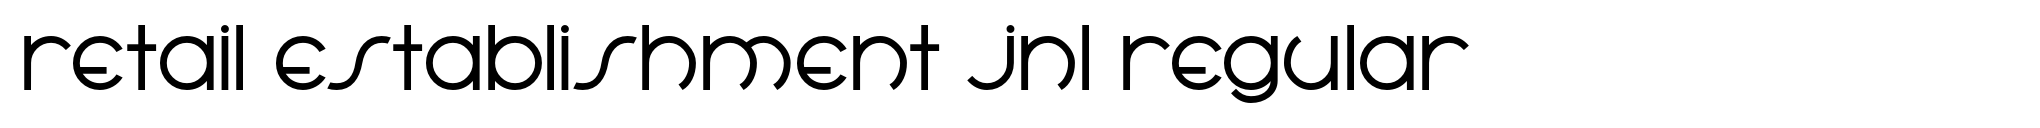 Retail Establishment JNL Regular image